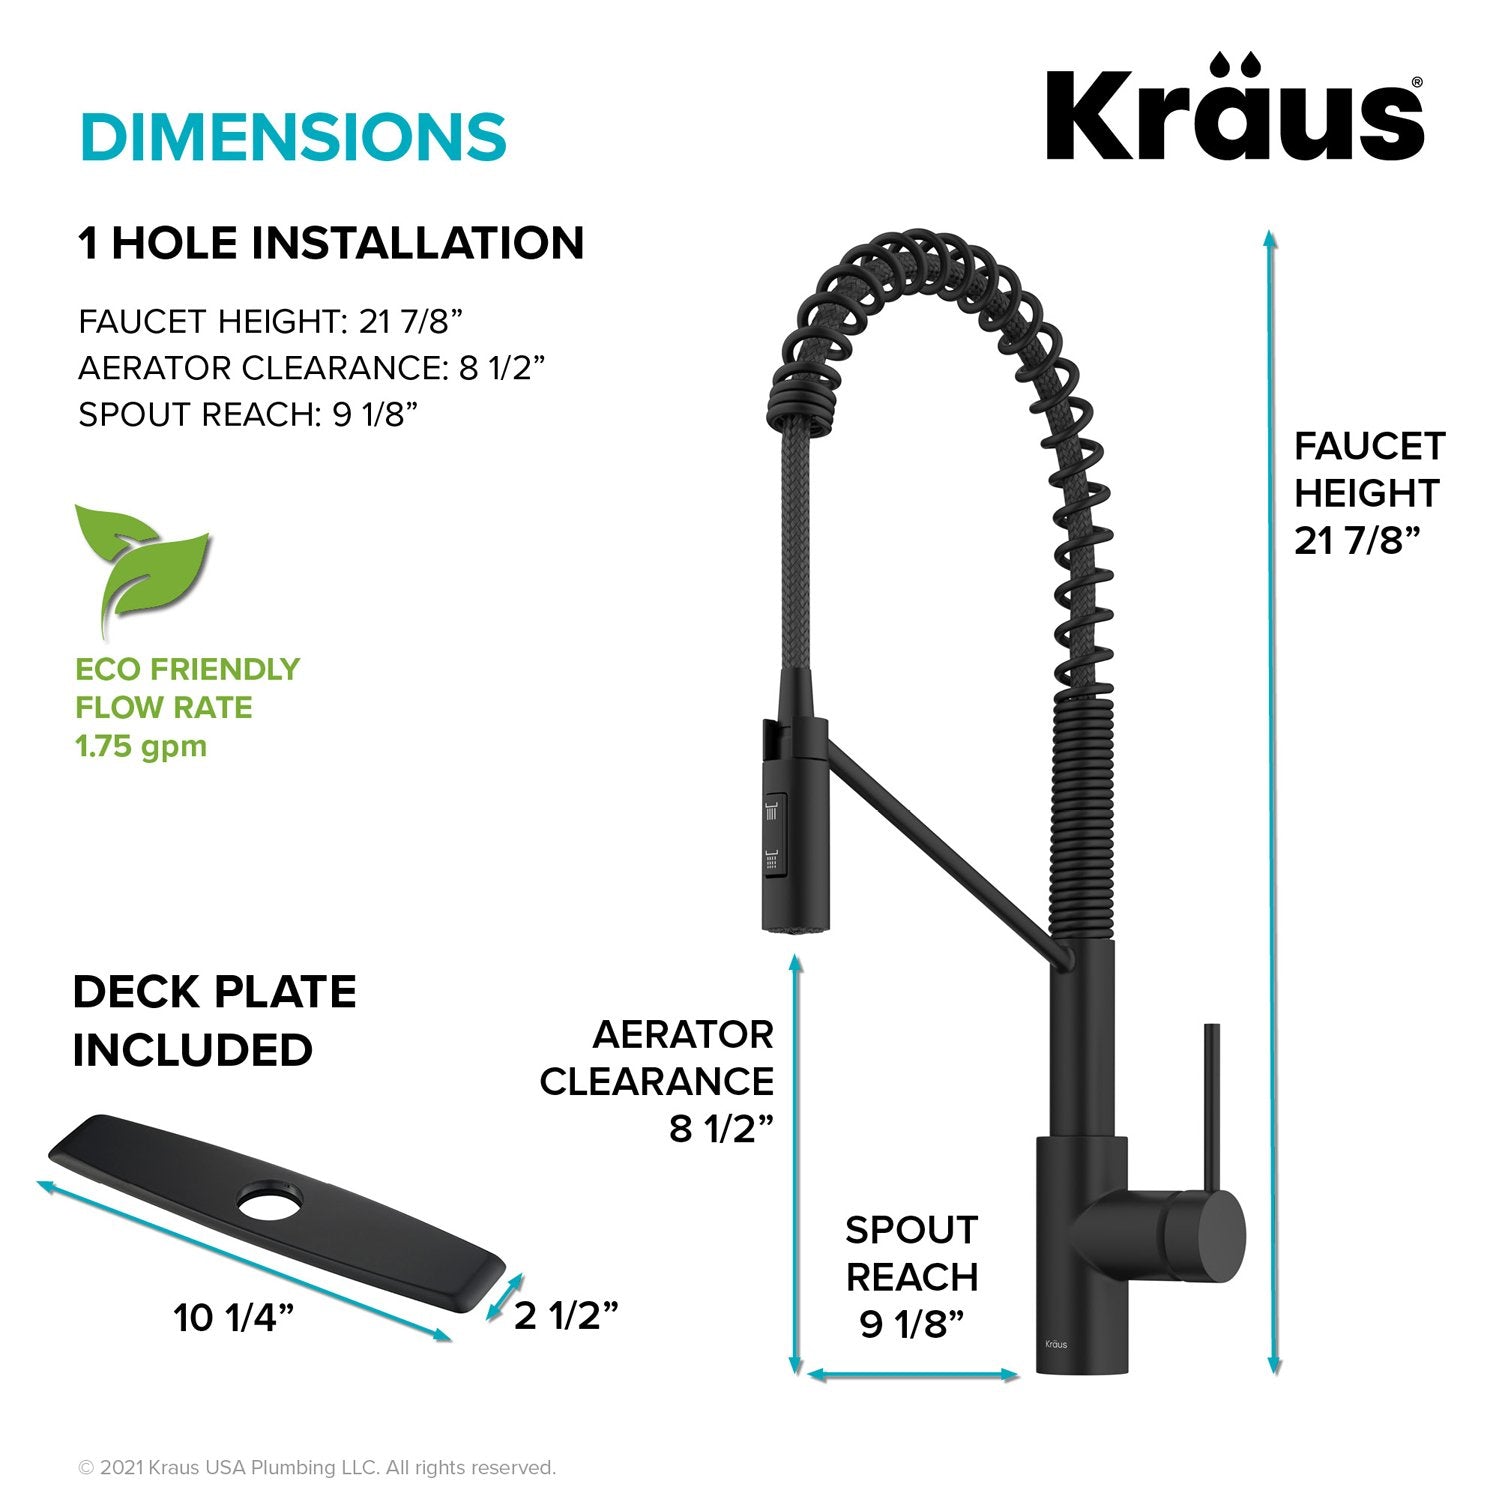 KRAUS Commercial Pull Down Kitchen Faucet in Matte Black KPF-2631MB | DirectSinks